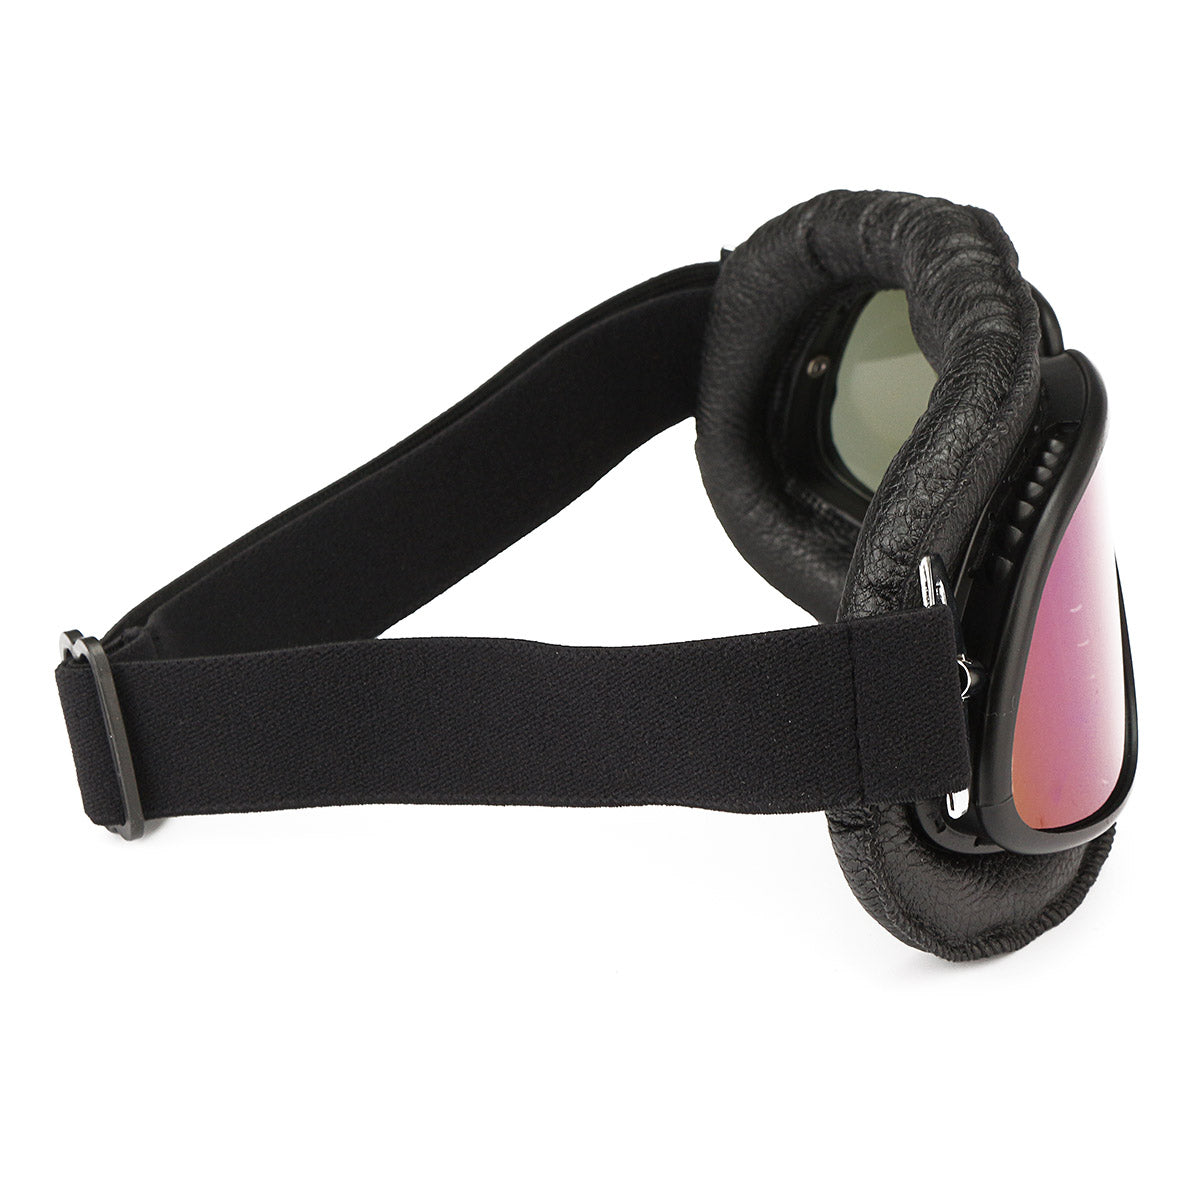 Dark Slate Gray Motorcycle Goggles Scooter Helmet Leather Anti UV Fog Protector Glasses